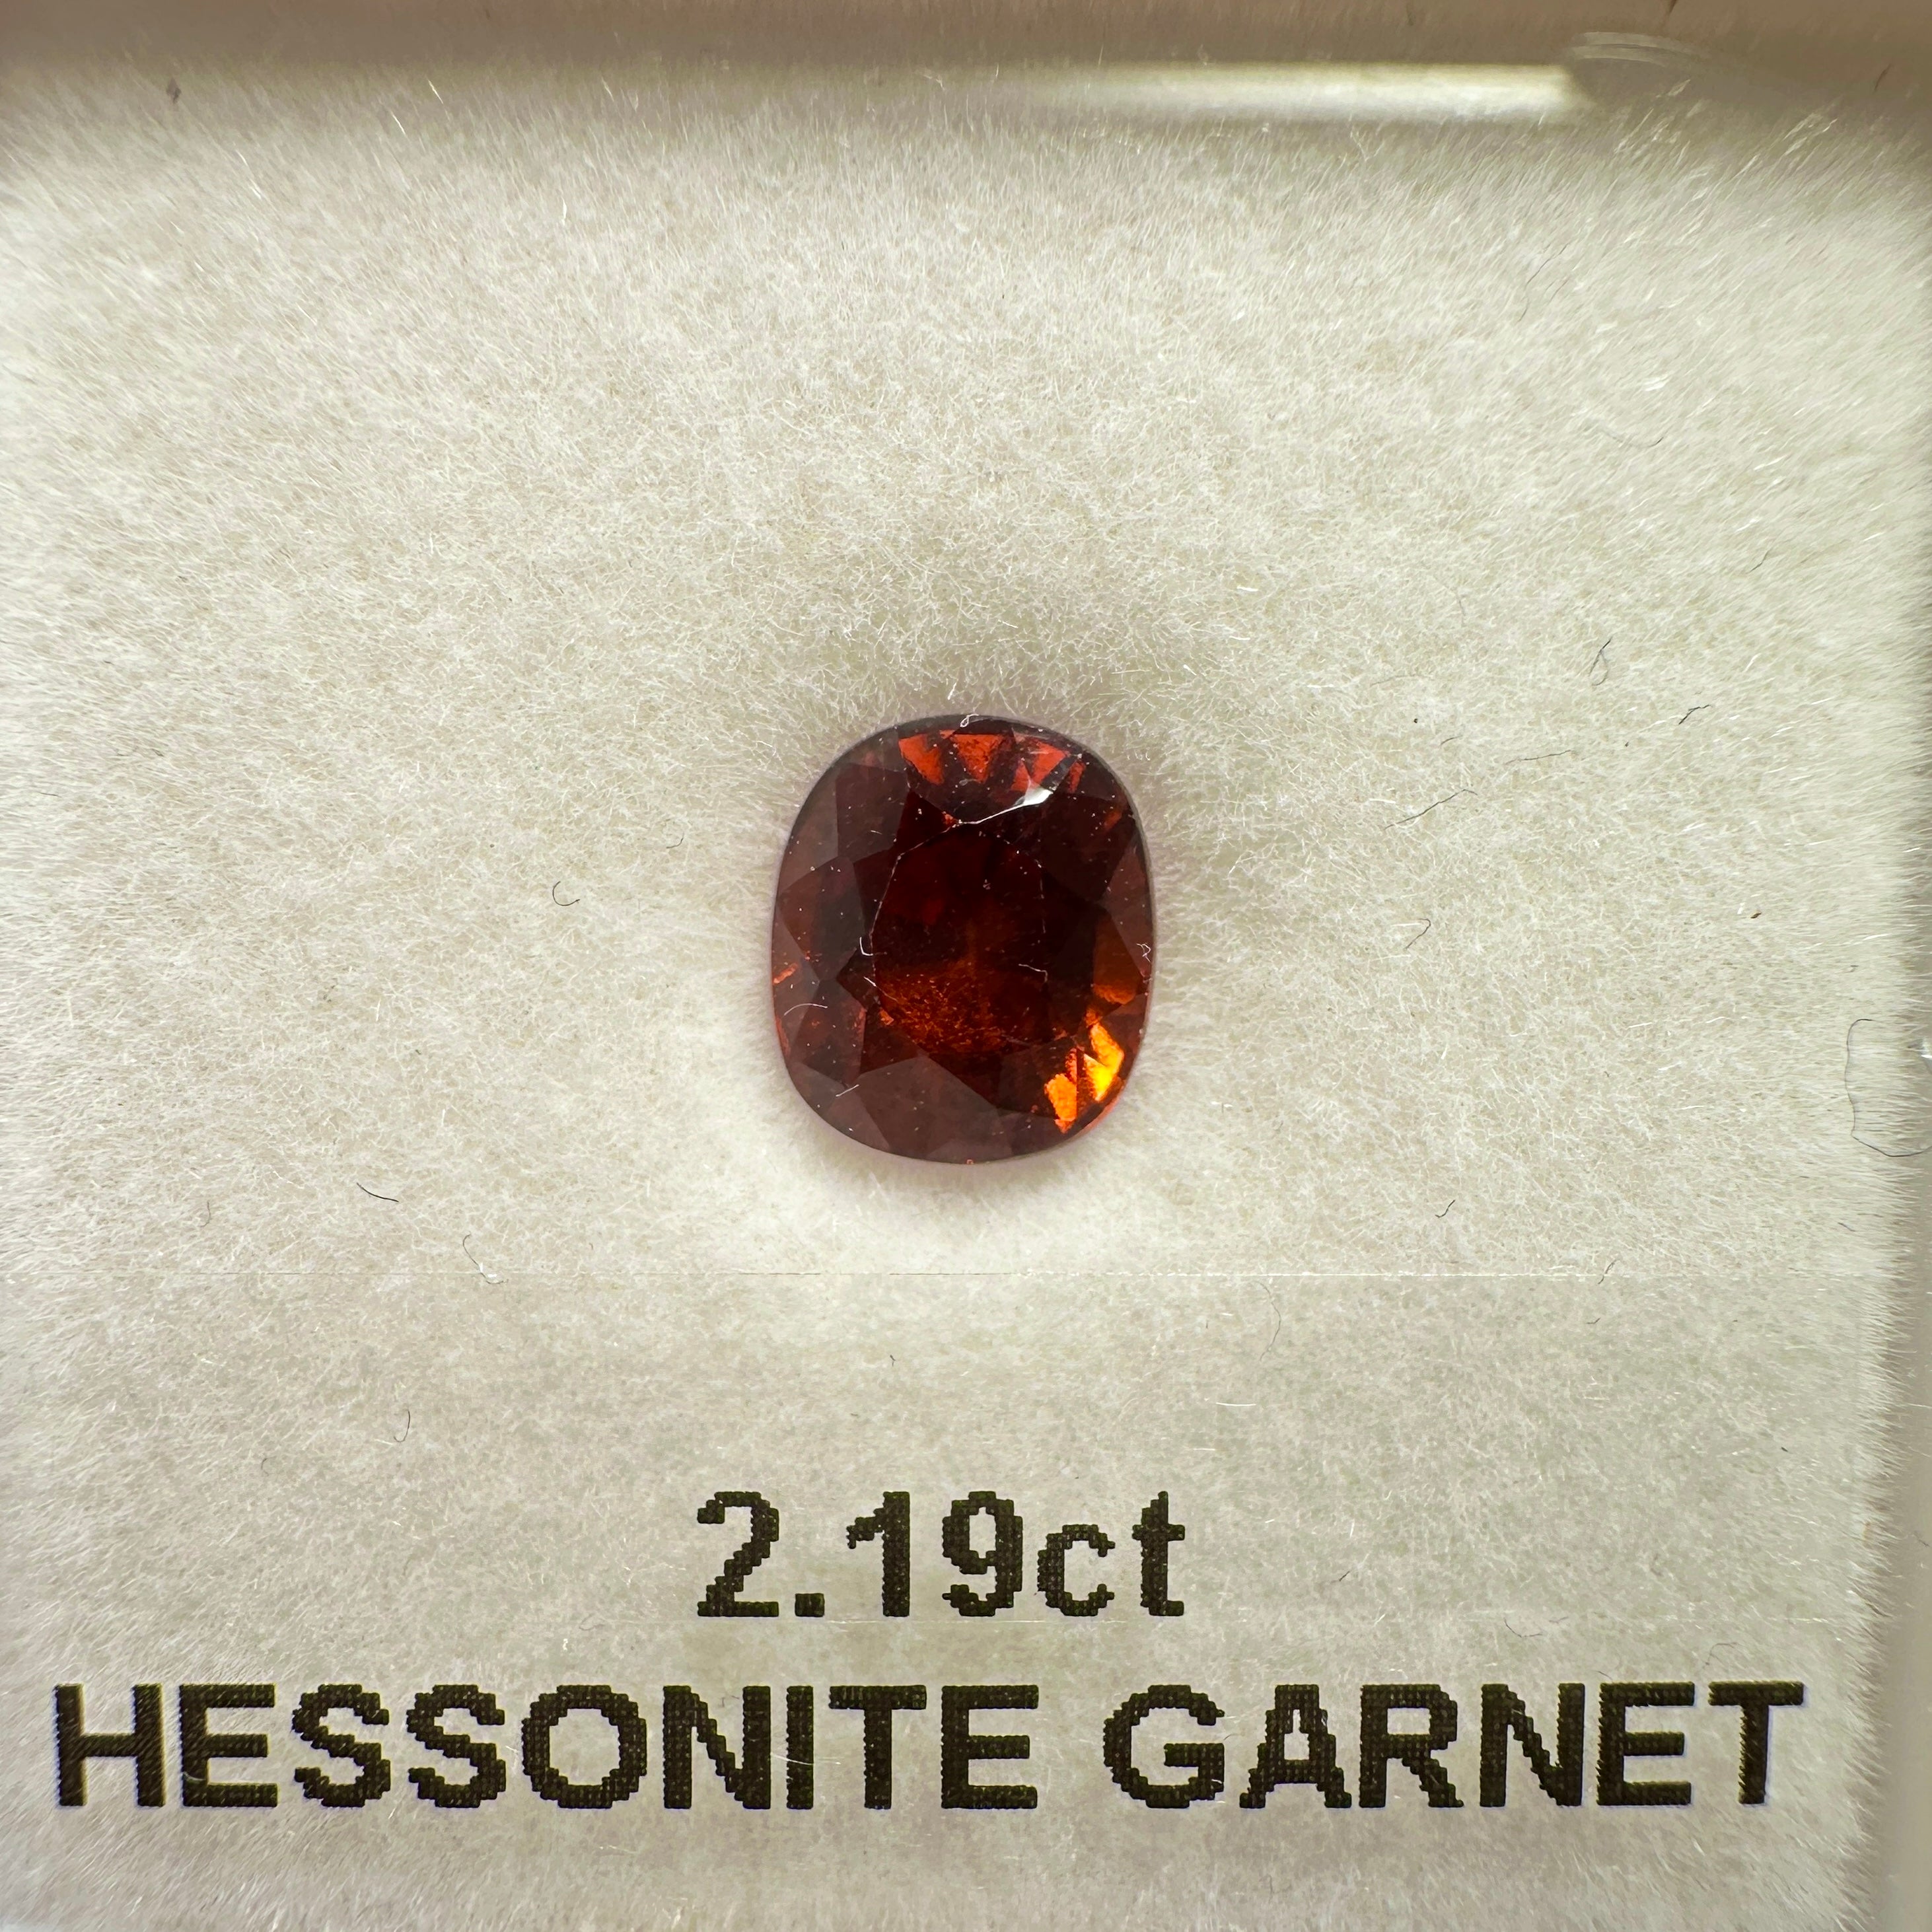 2.19ct Hessonite Garnet, Untreated Unheated, native cut